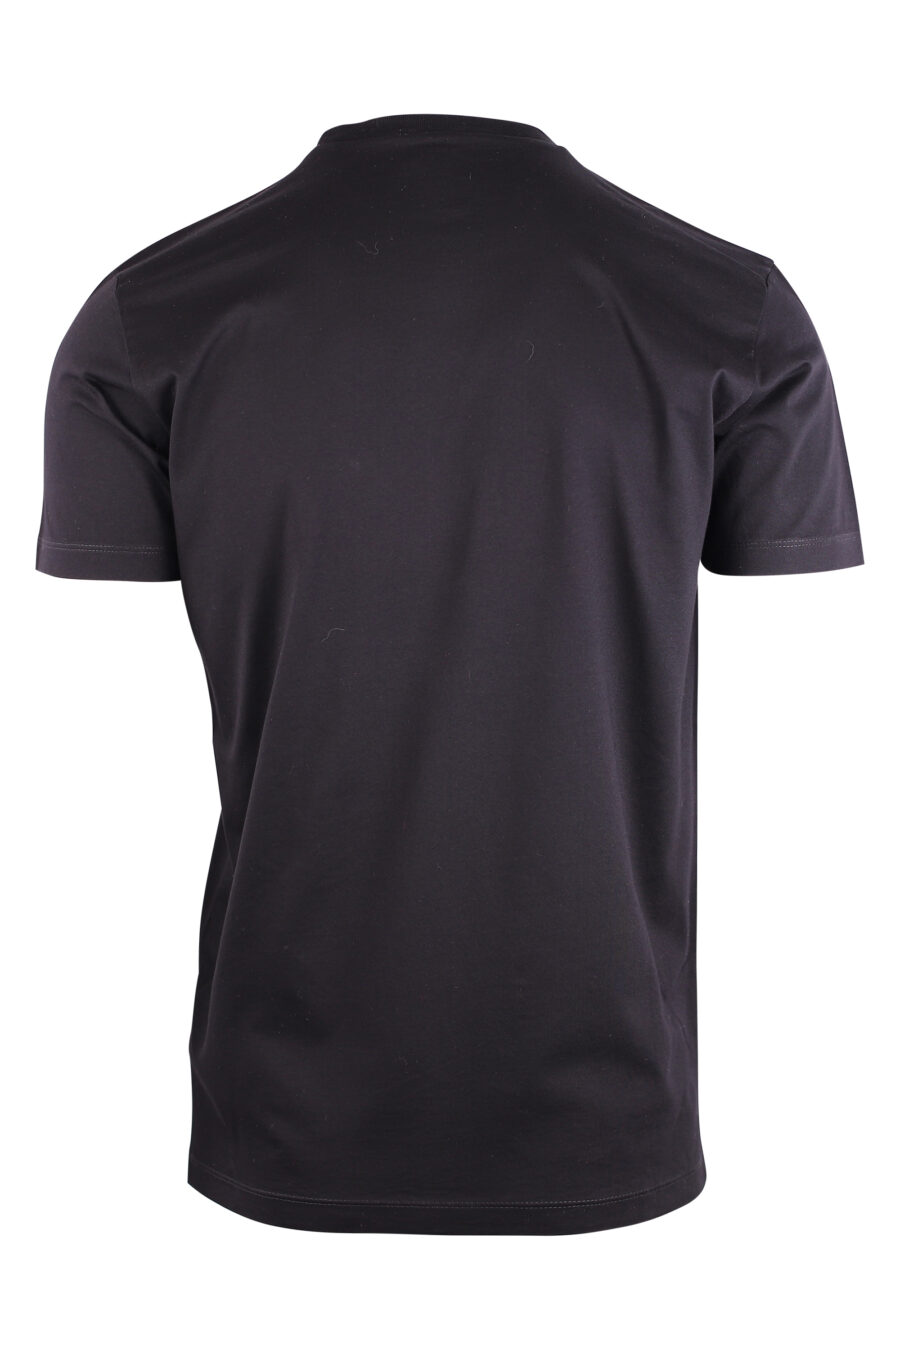 Camiseta negra con logo "ibra" monocromático - IMG 3110